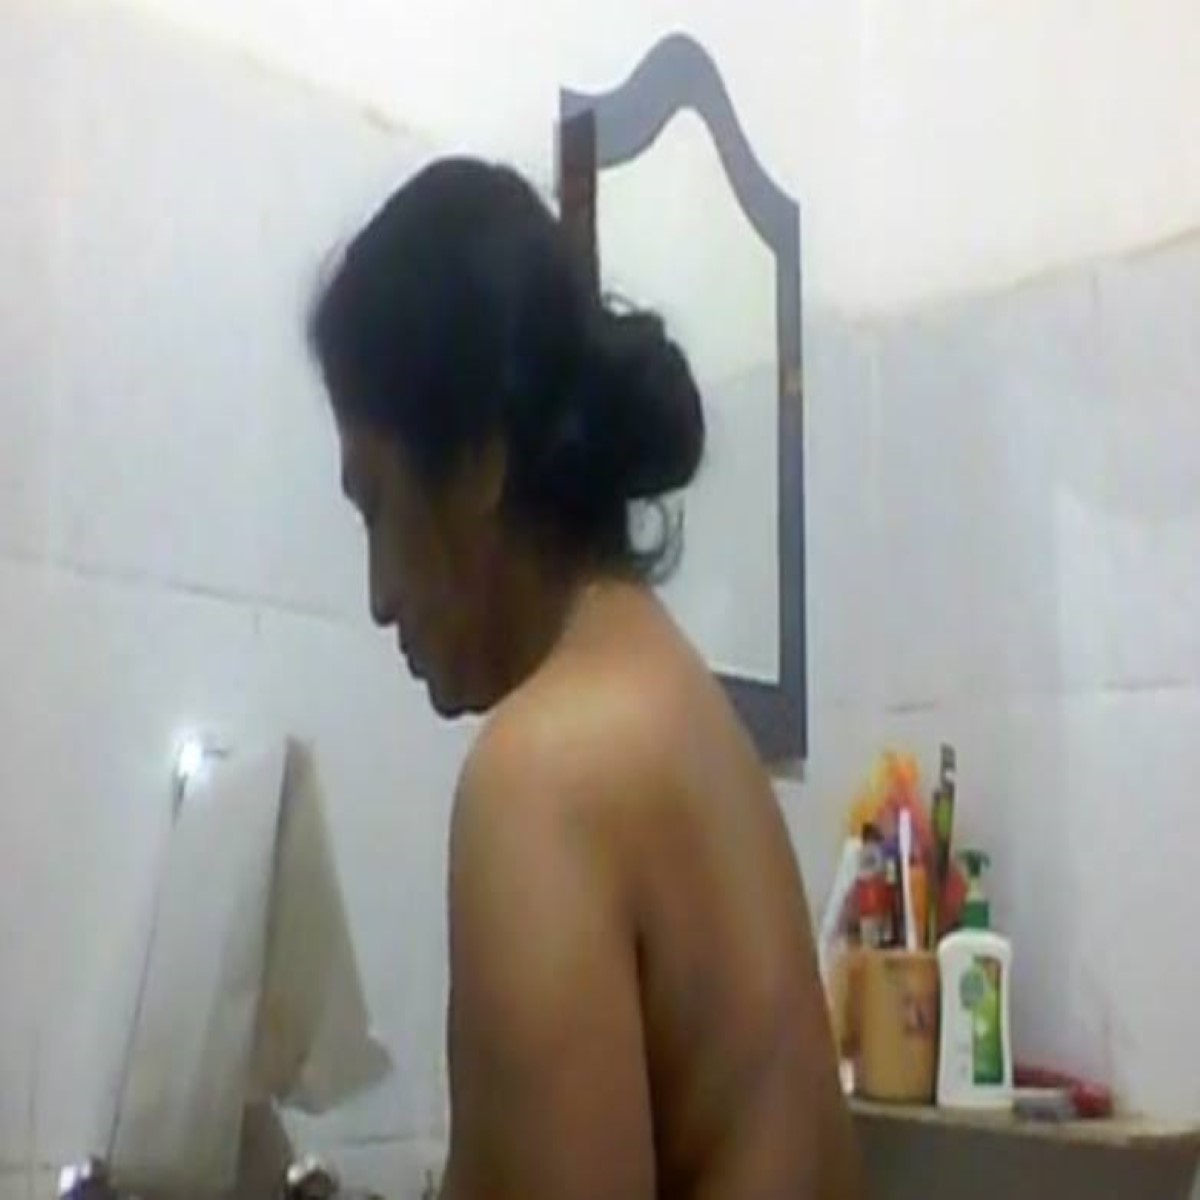 Tamil pengal bathroom video